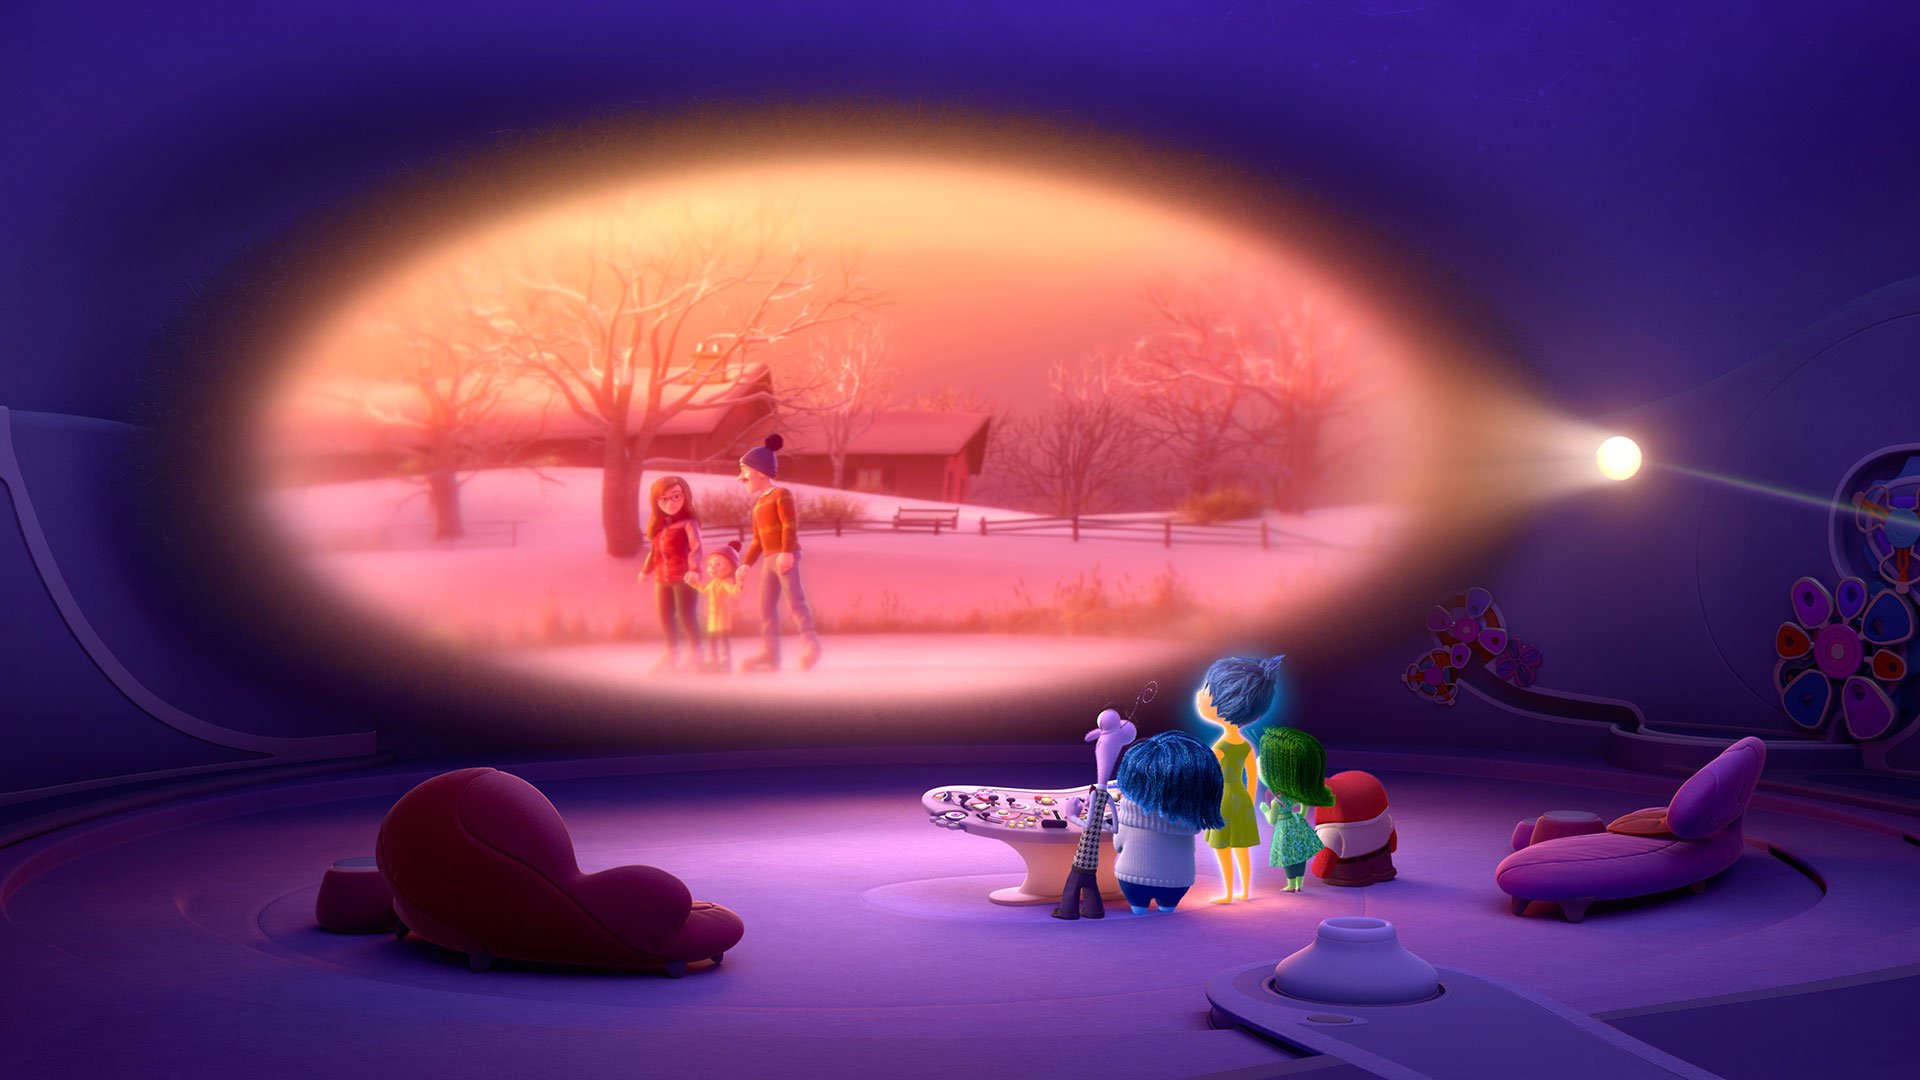 Disney Pixar Inside Out Movie